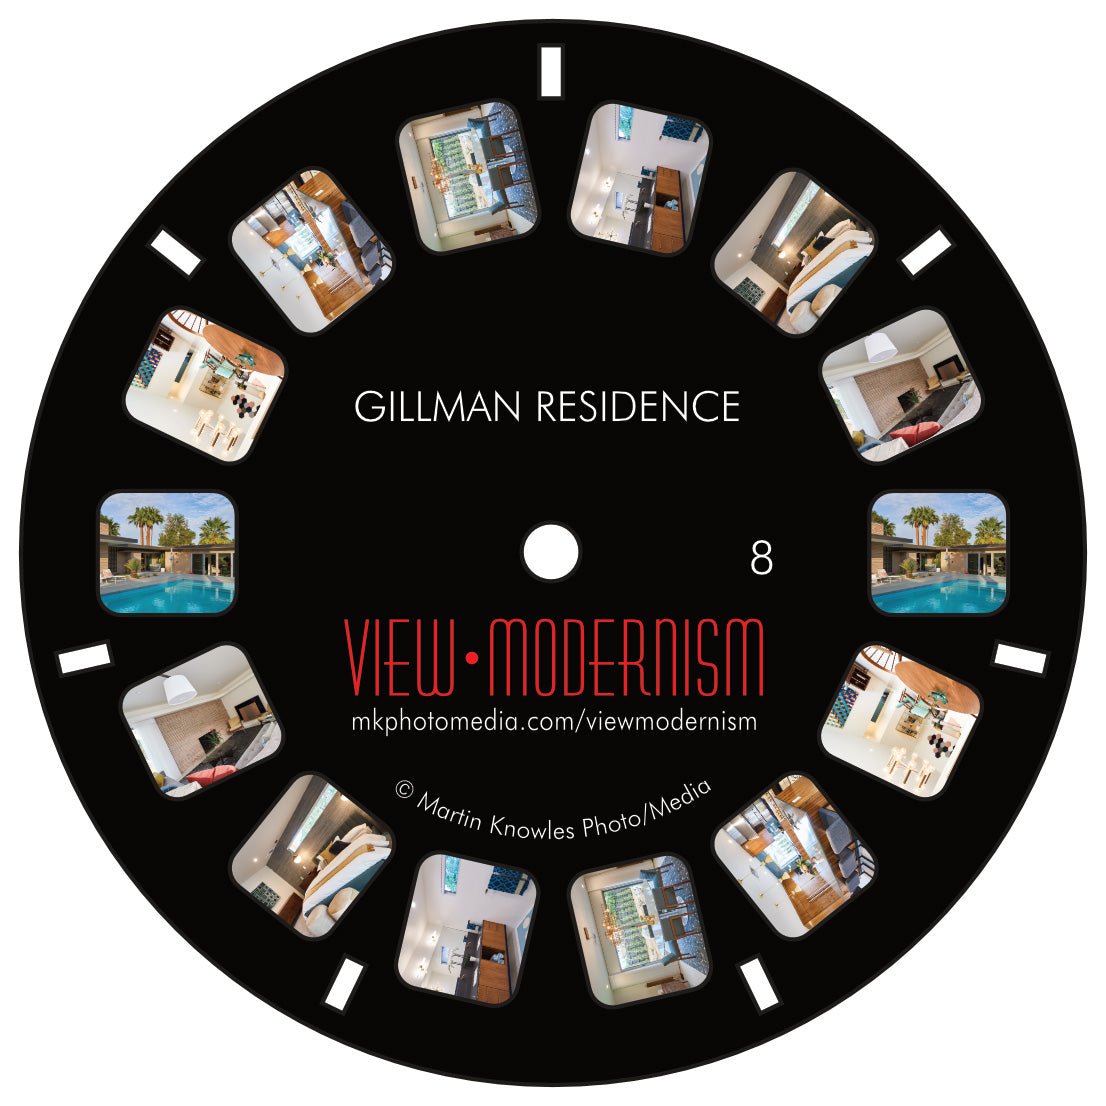 View Modernism Stereoscopic Reel - Gillman Residence - Destination PSP